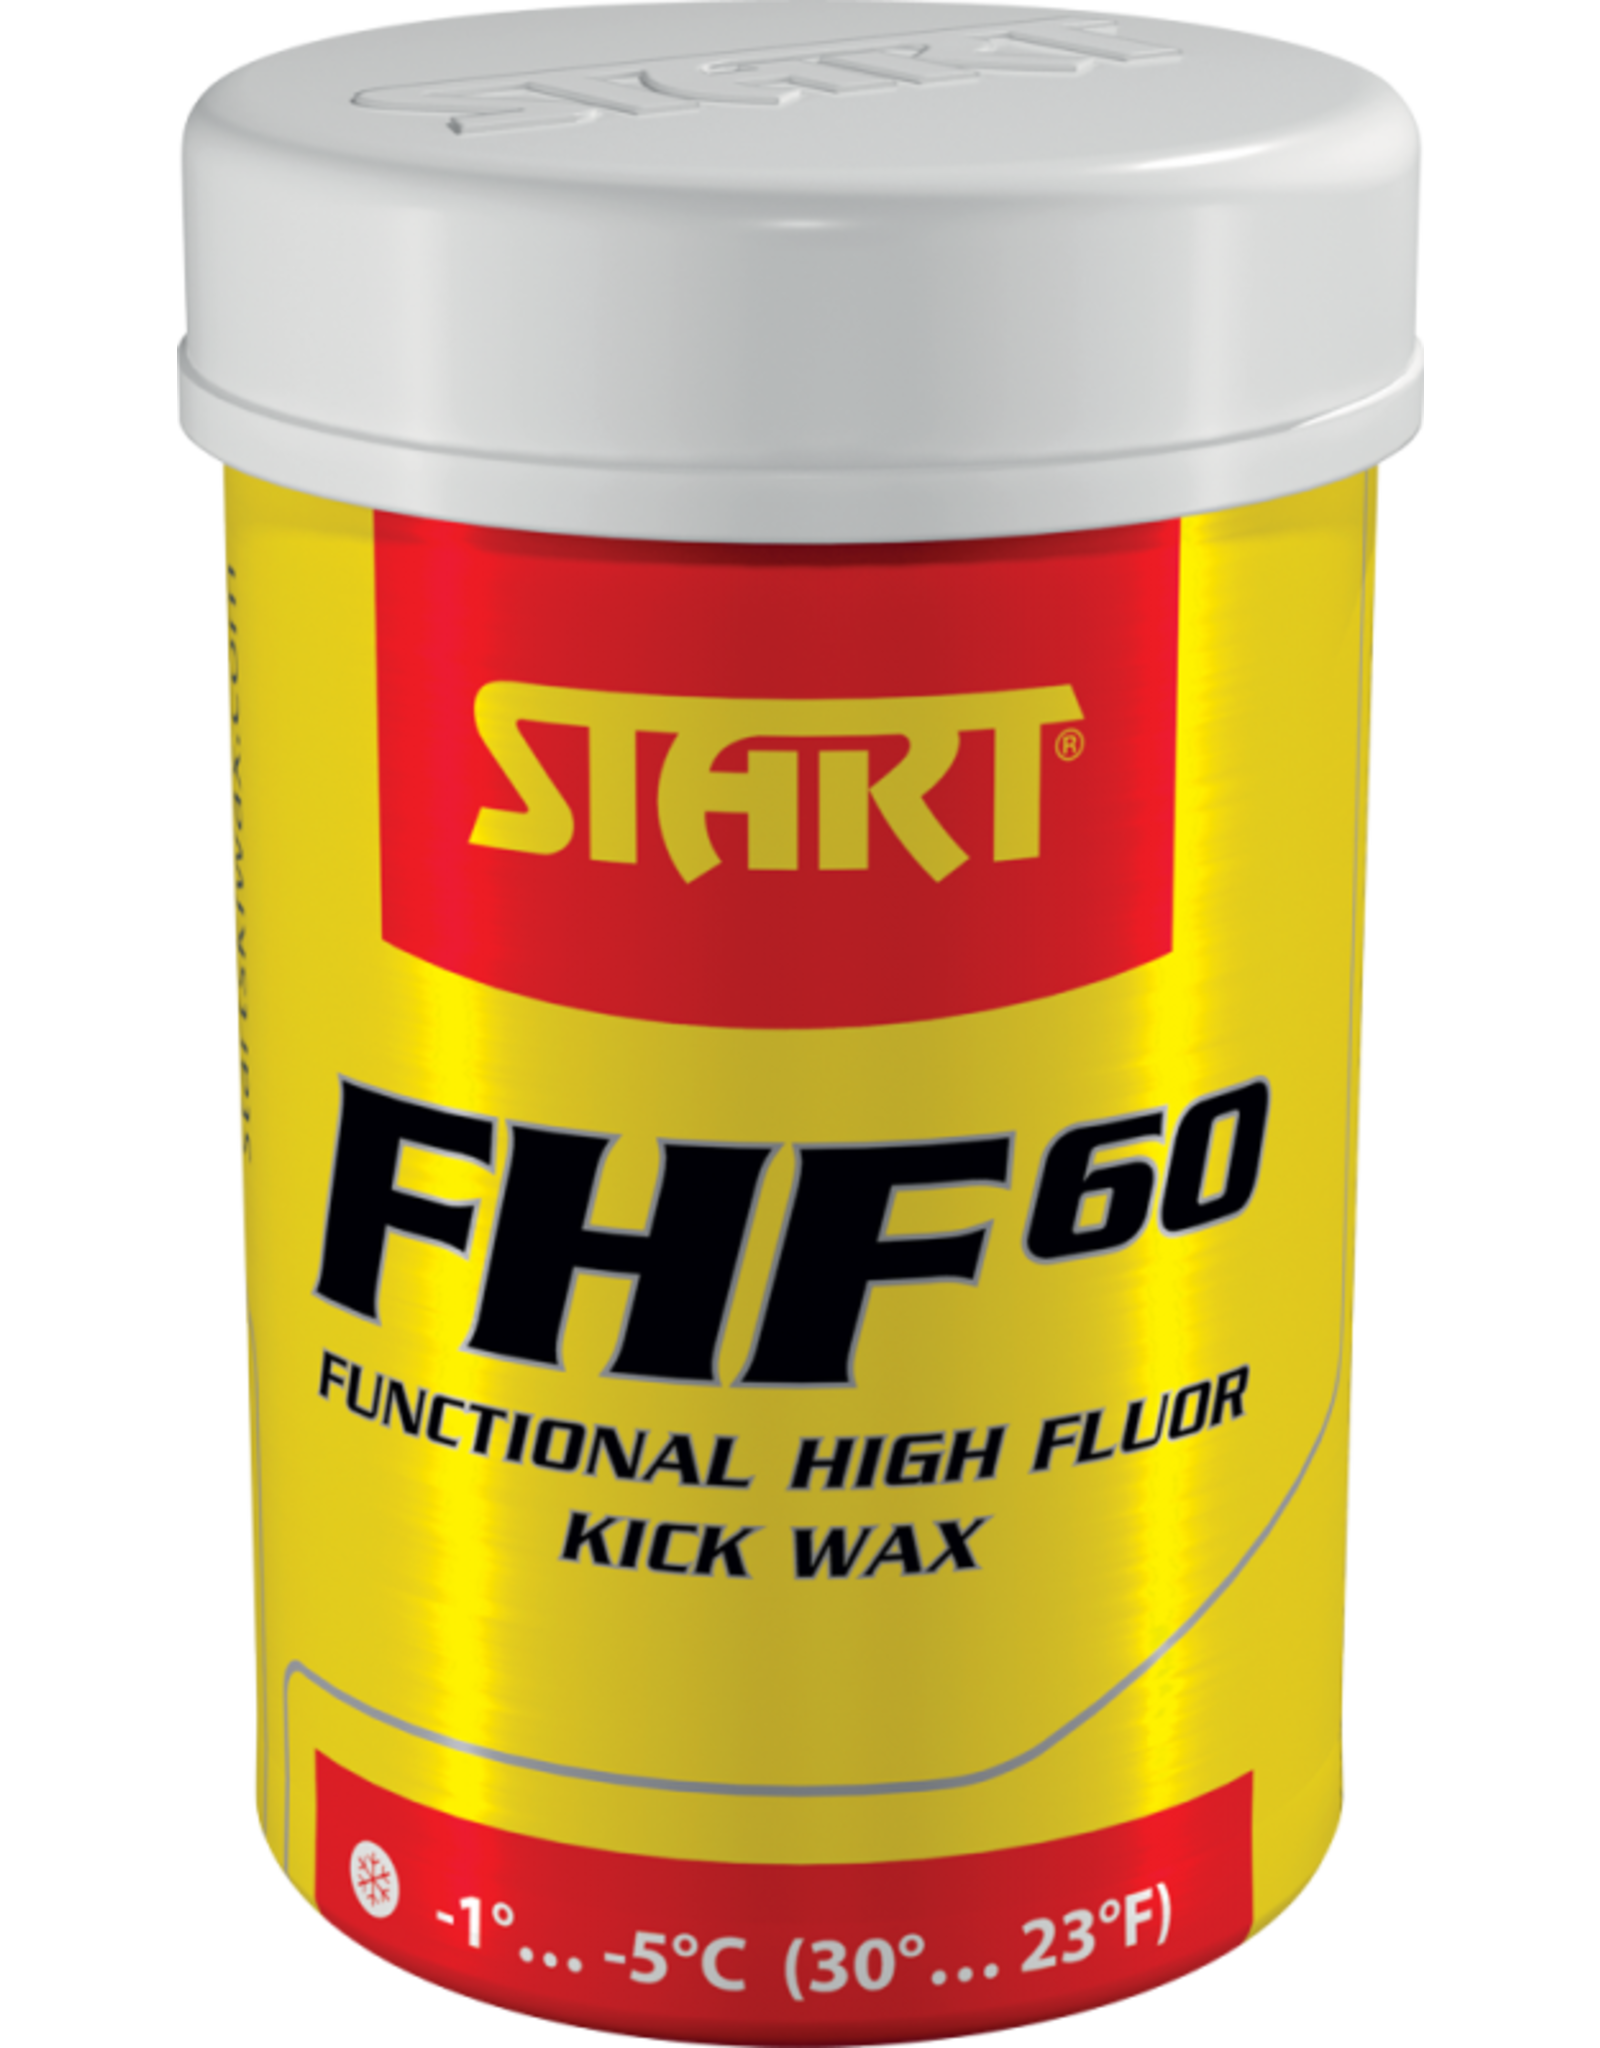 Start Start Kick FHF60 Fluor